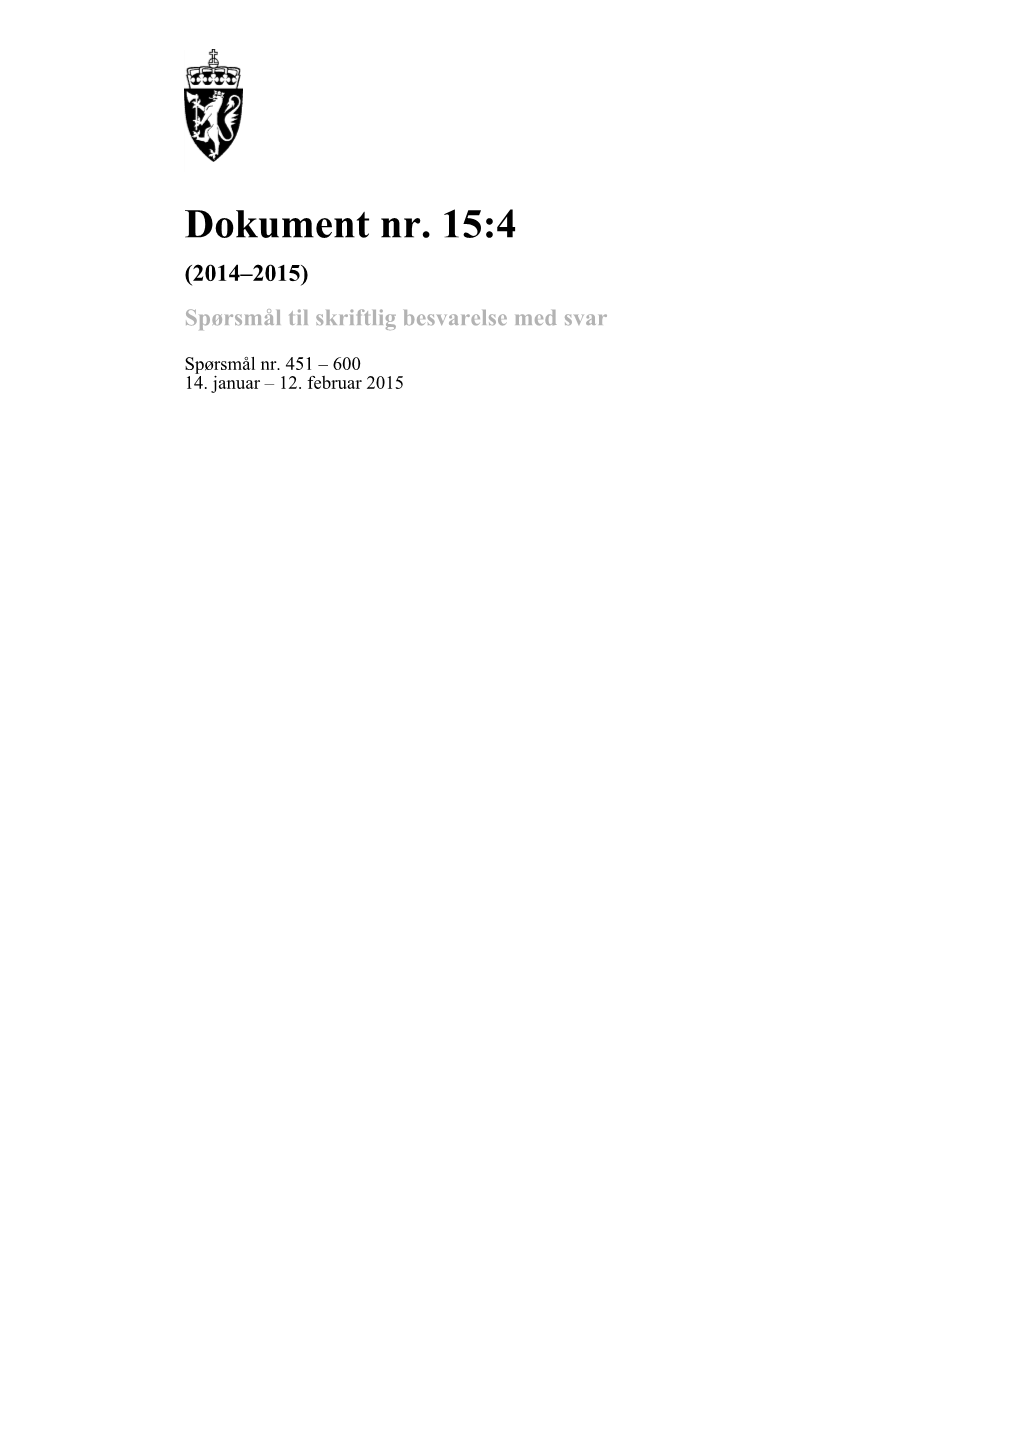 Dokument Nr. 15:4 (2014-2015)